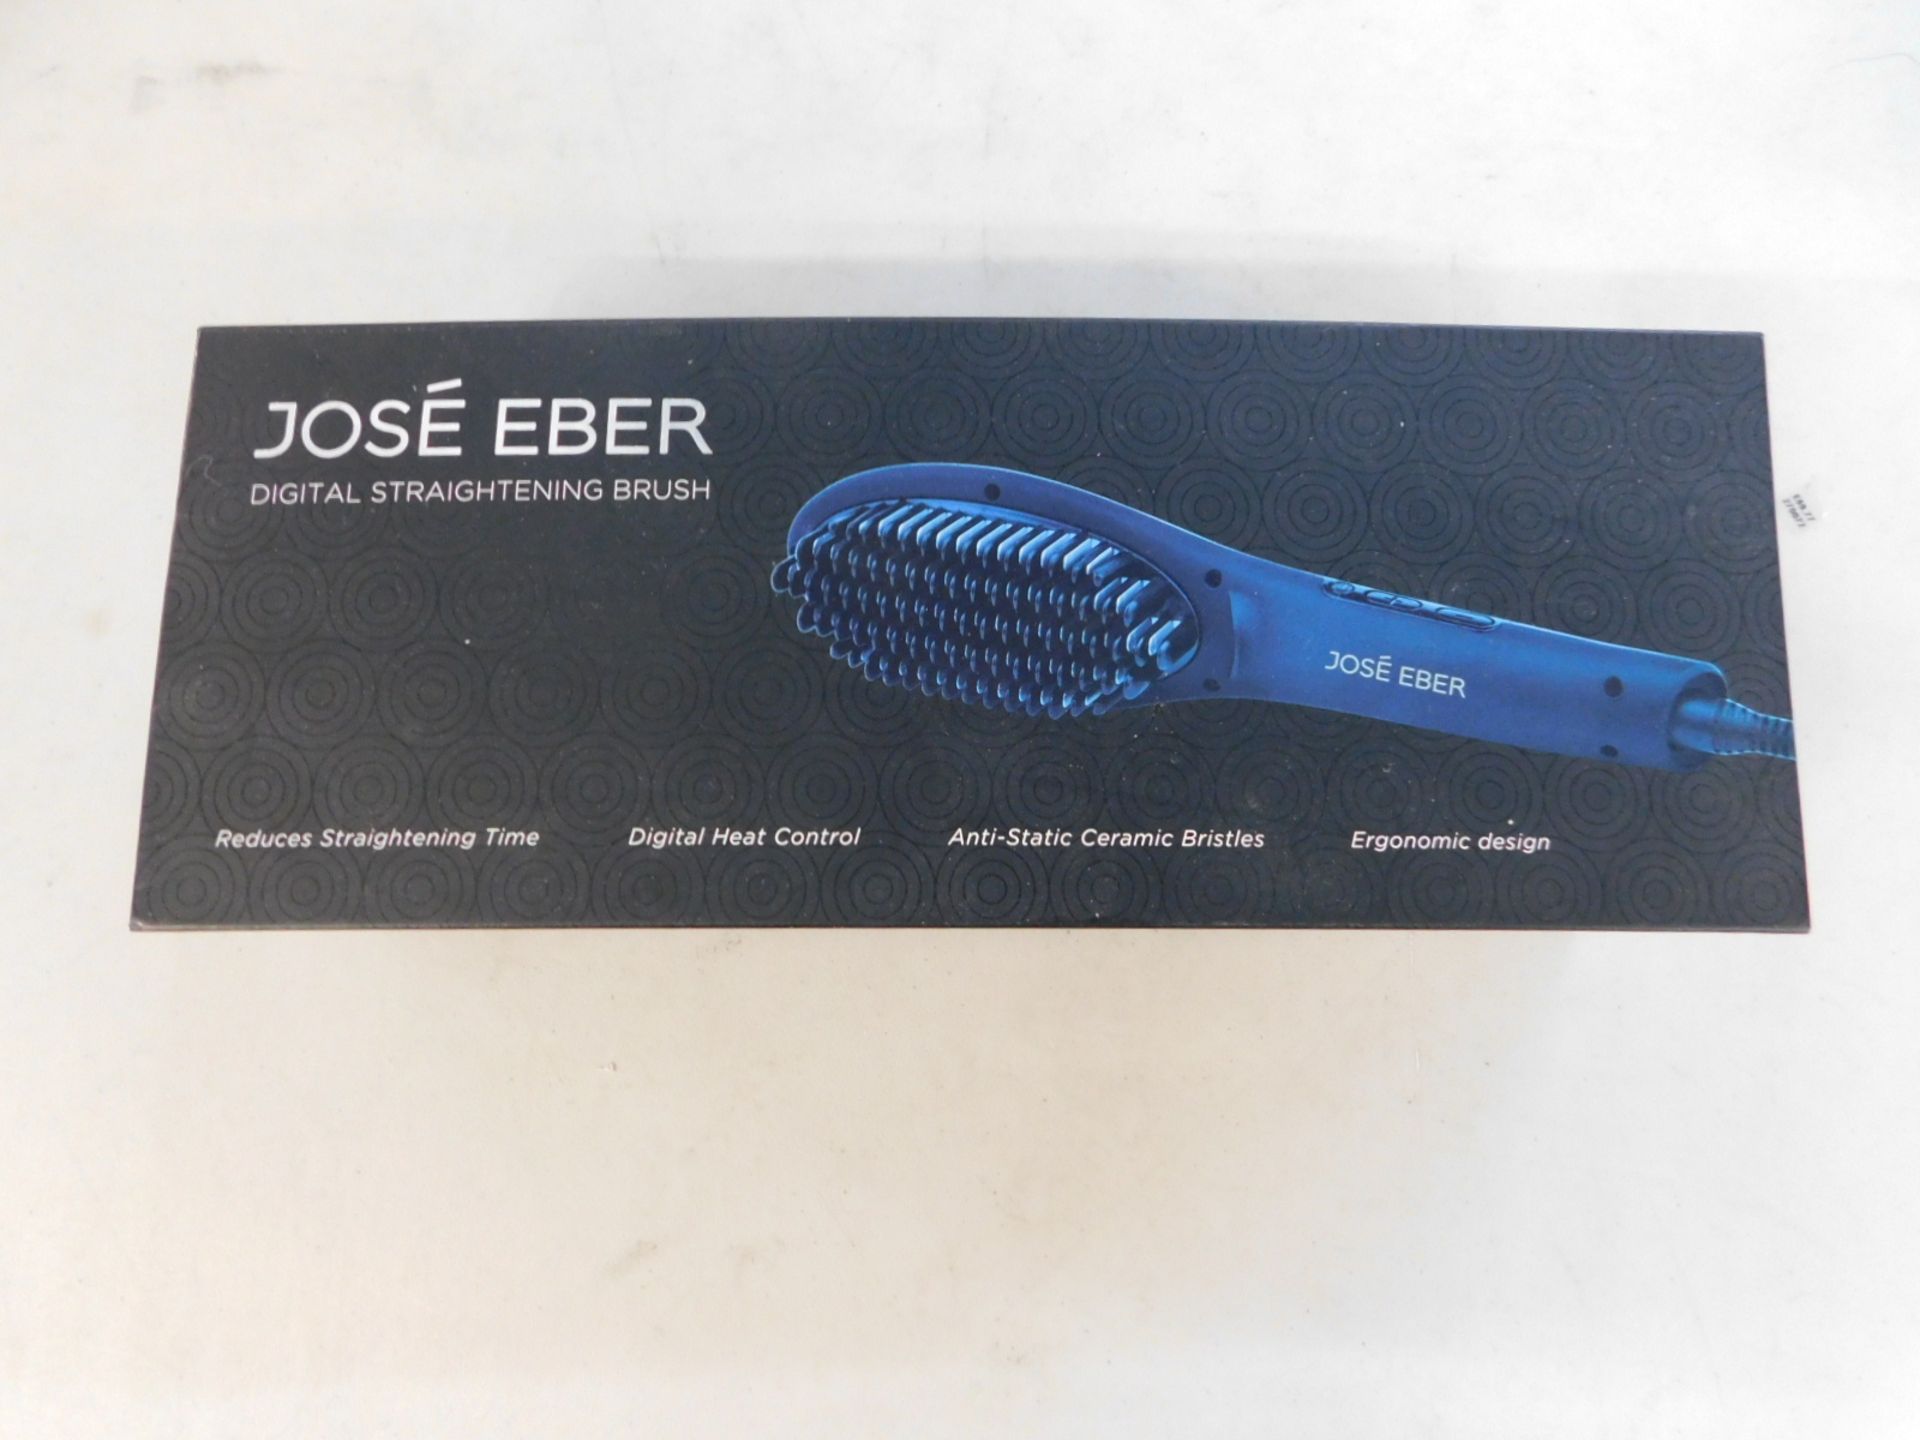 1 BOXED JOSE EBER DIGITAL STRAIGHTENING BRUSH RRP Â£79.99